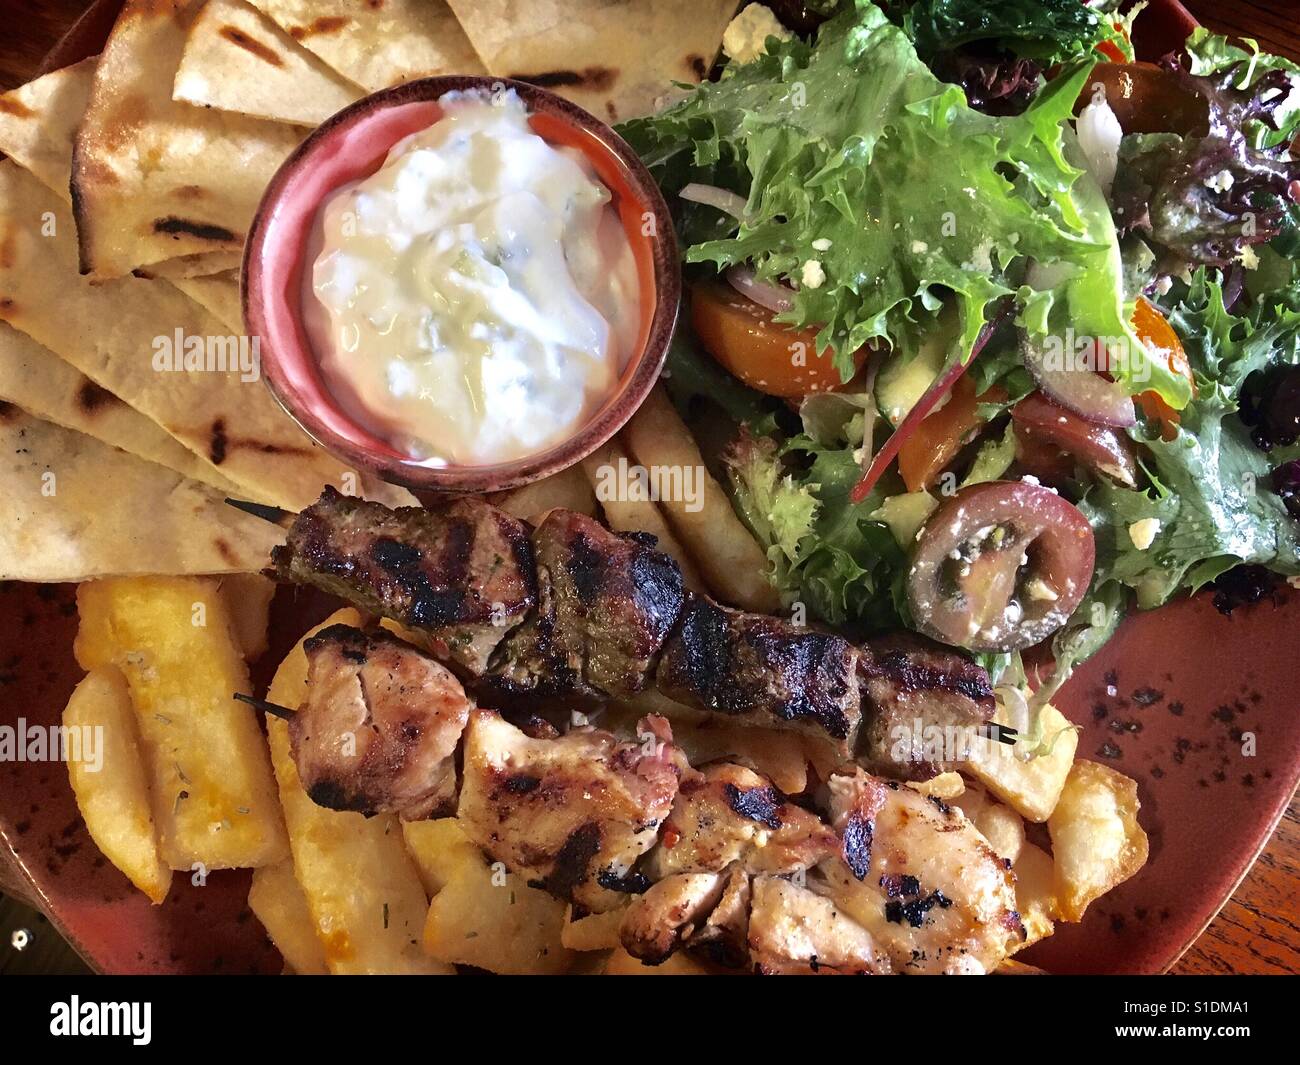 Souvlaki, peta, salad, hot chips & sauce Stock Photo - Alamy